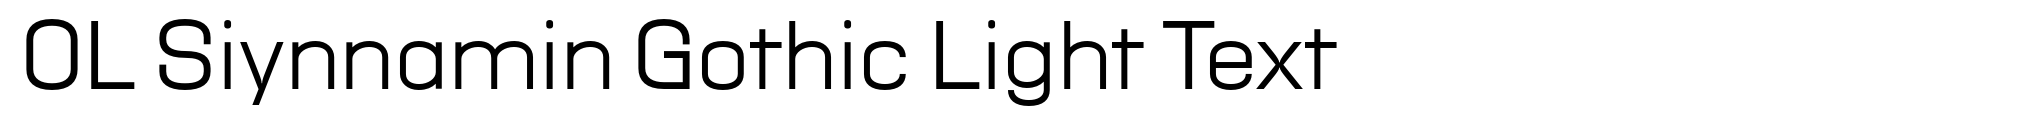 OL Siynnamin Gothic Light Text image